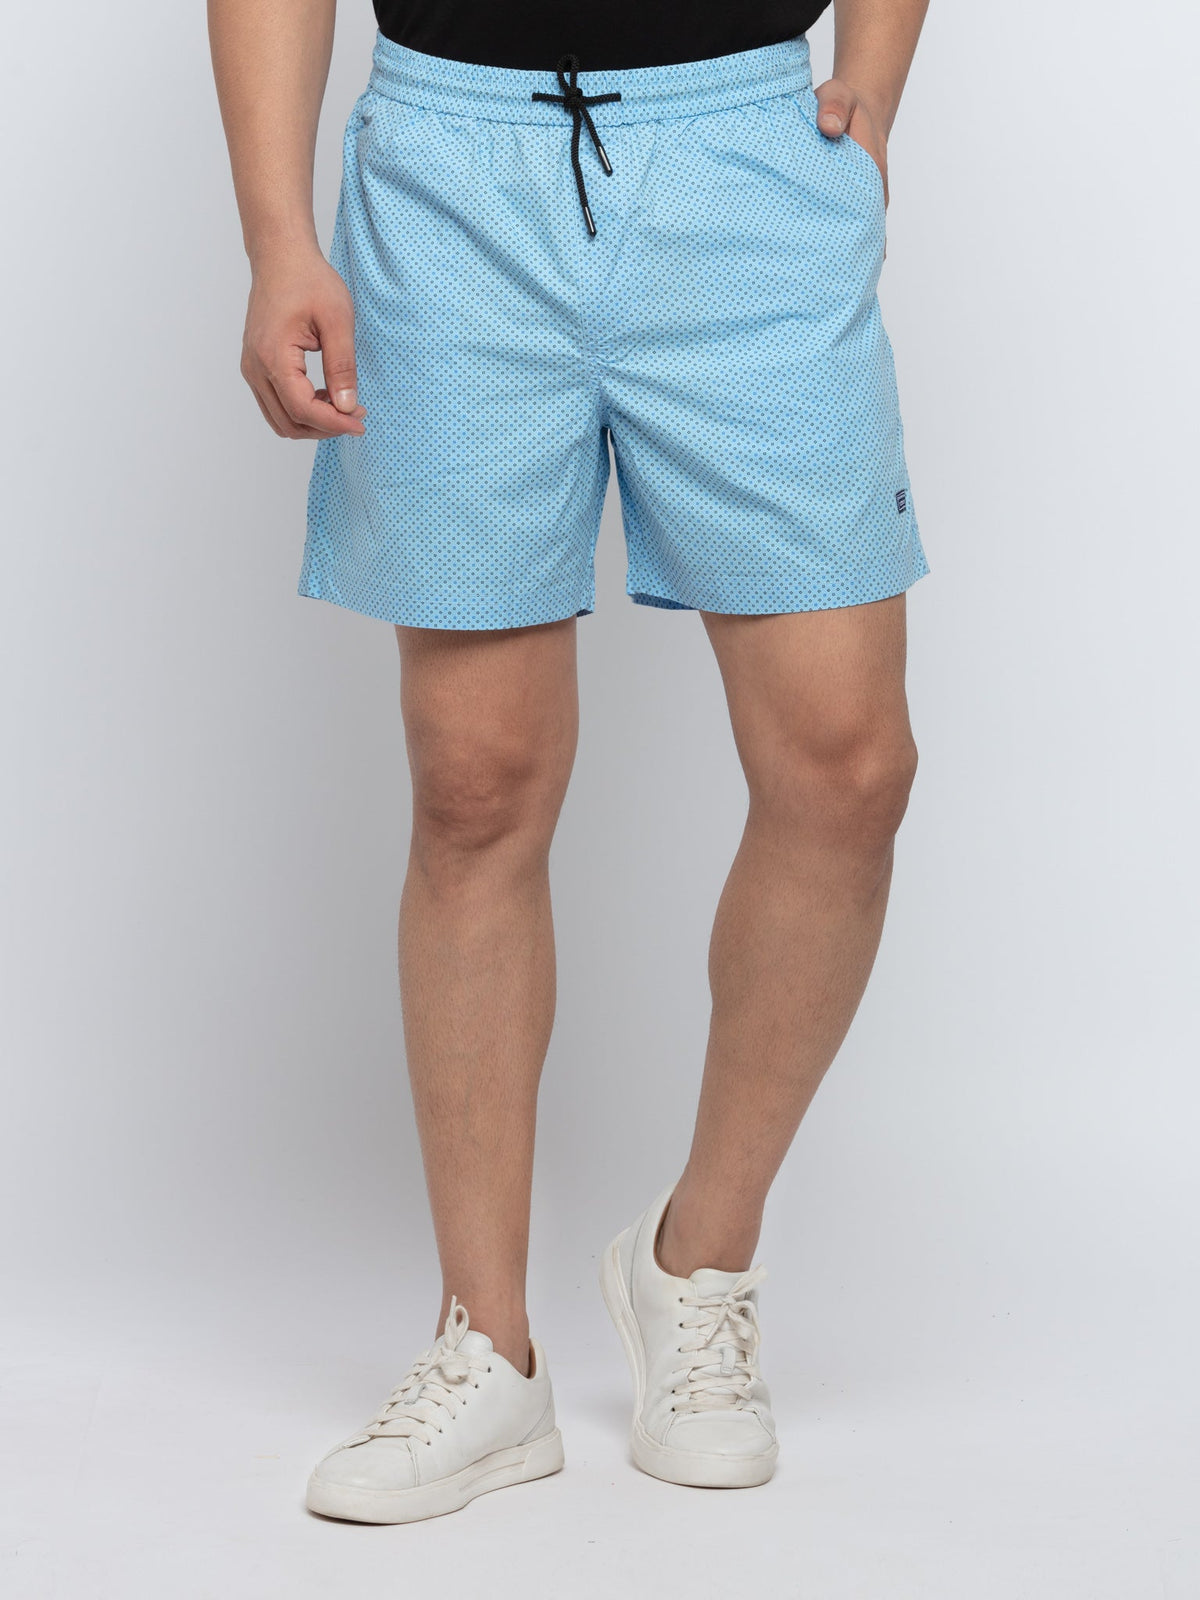 Status Quo |Printed Regular Fit Shorts - S, M, L, XL, XXL